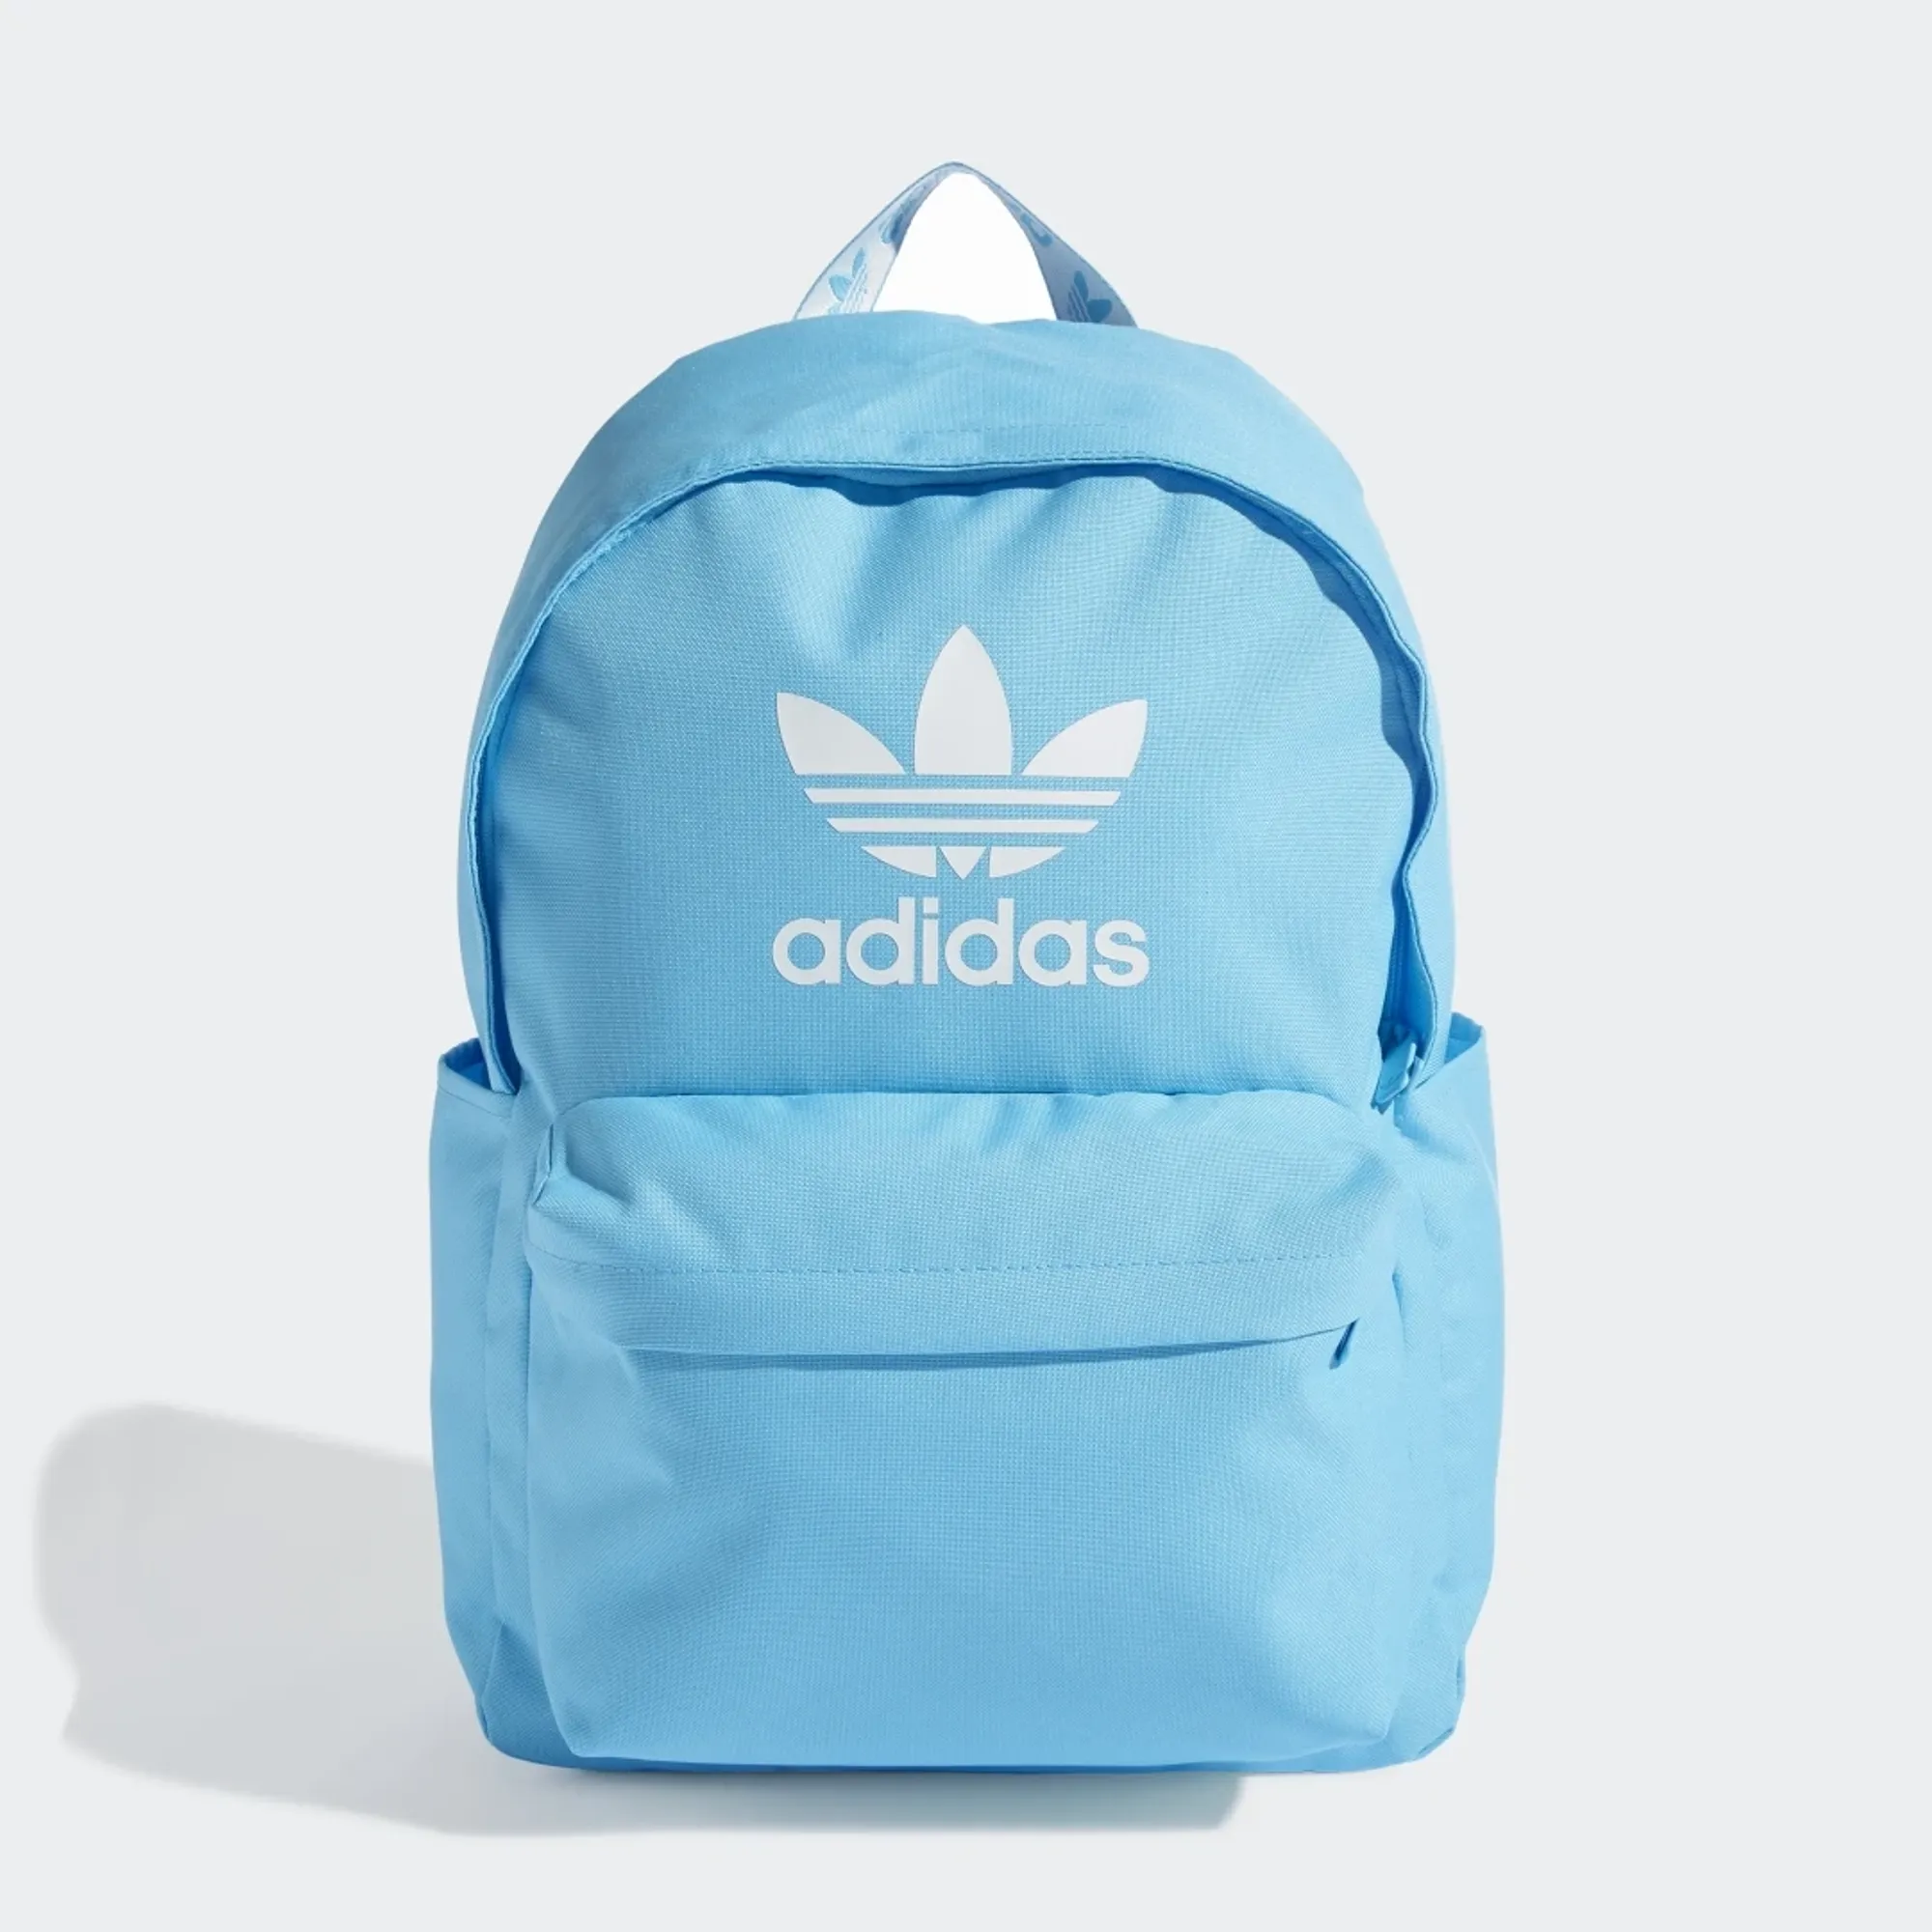 adidas Originals Womens Santiago Blue Mini School Backpack | eBay